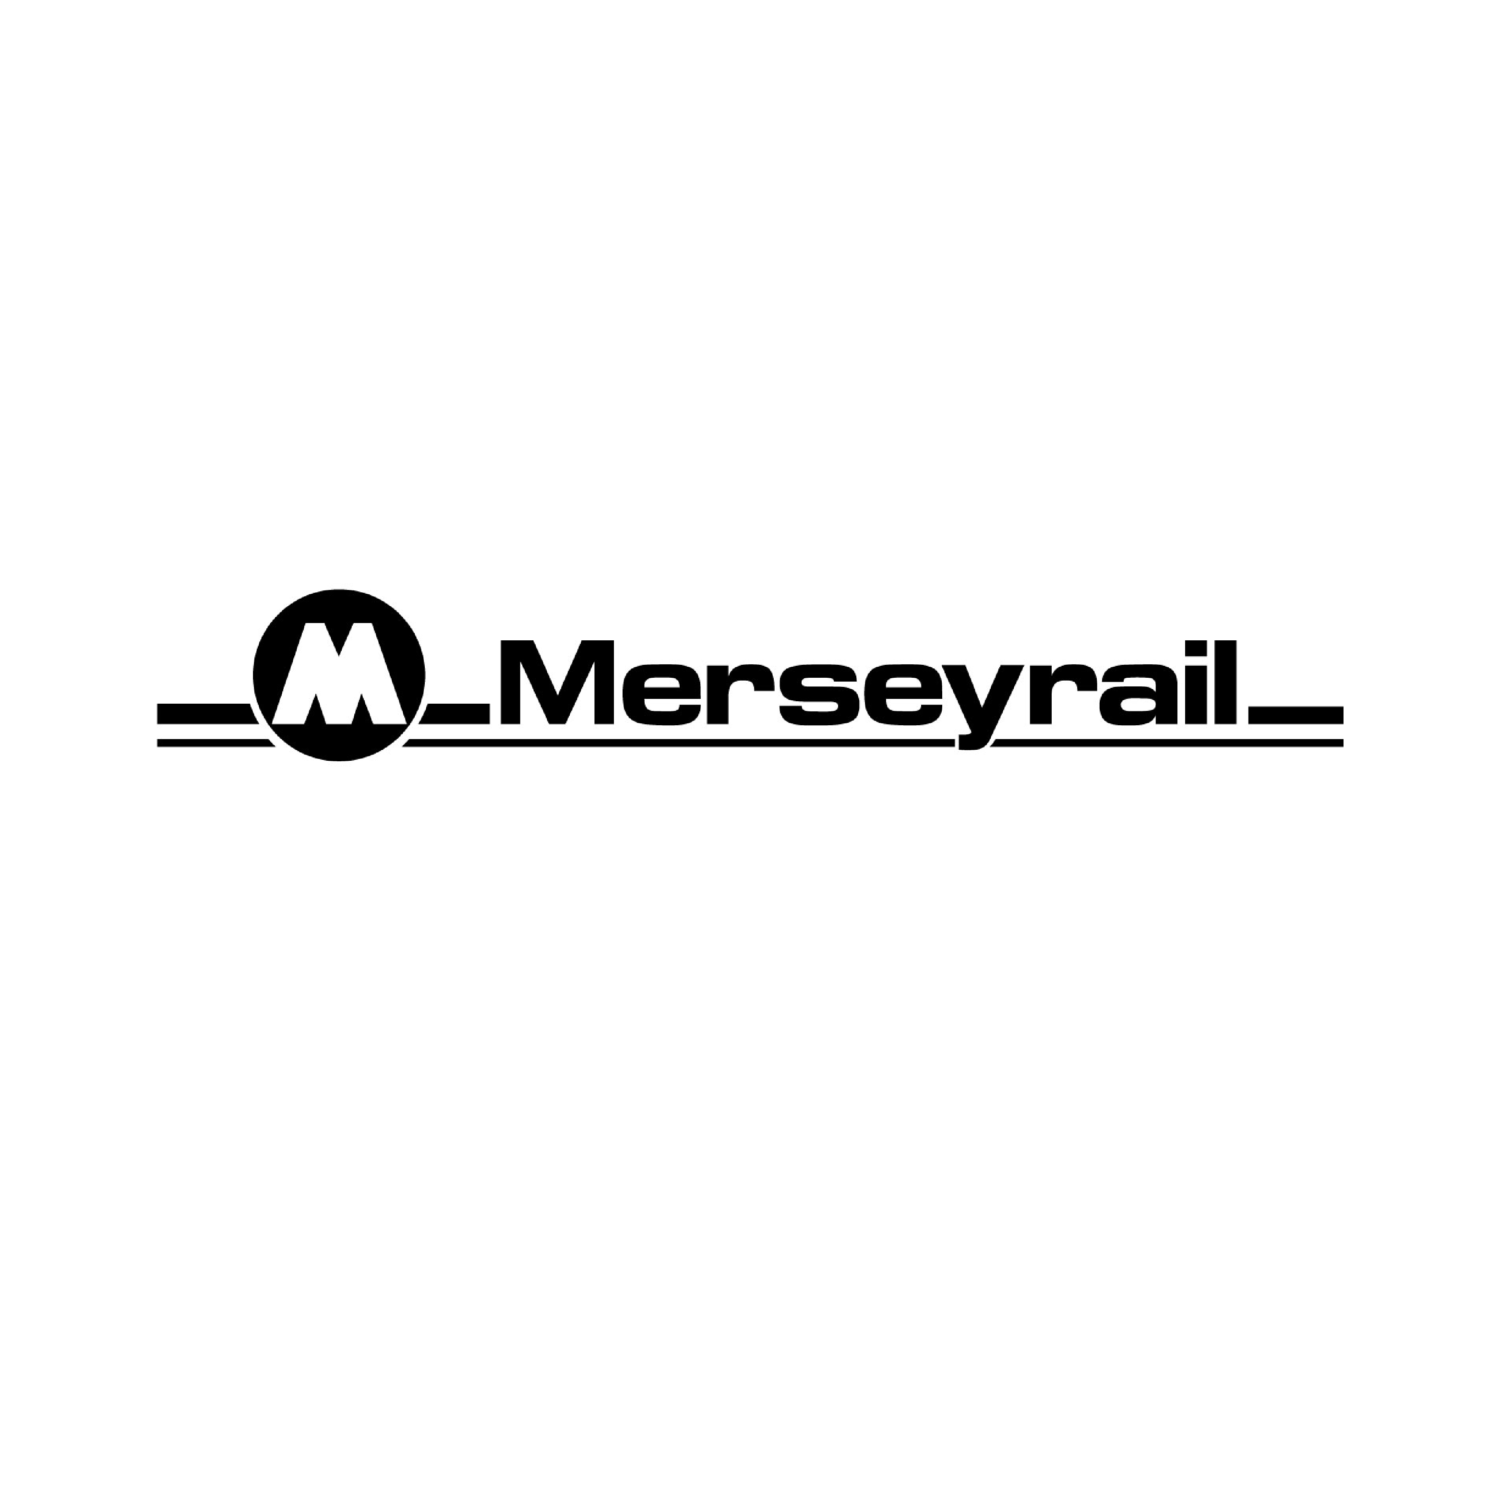 Merseyrail logo